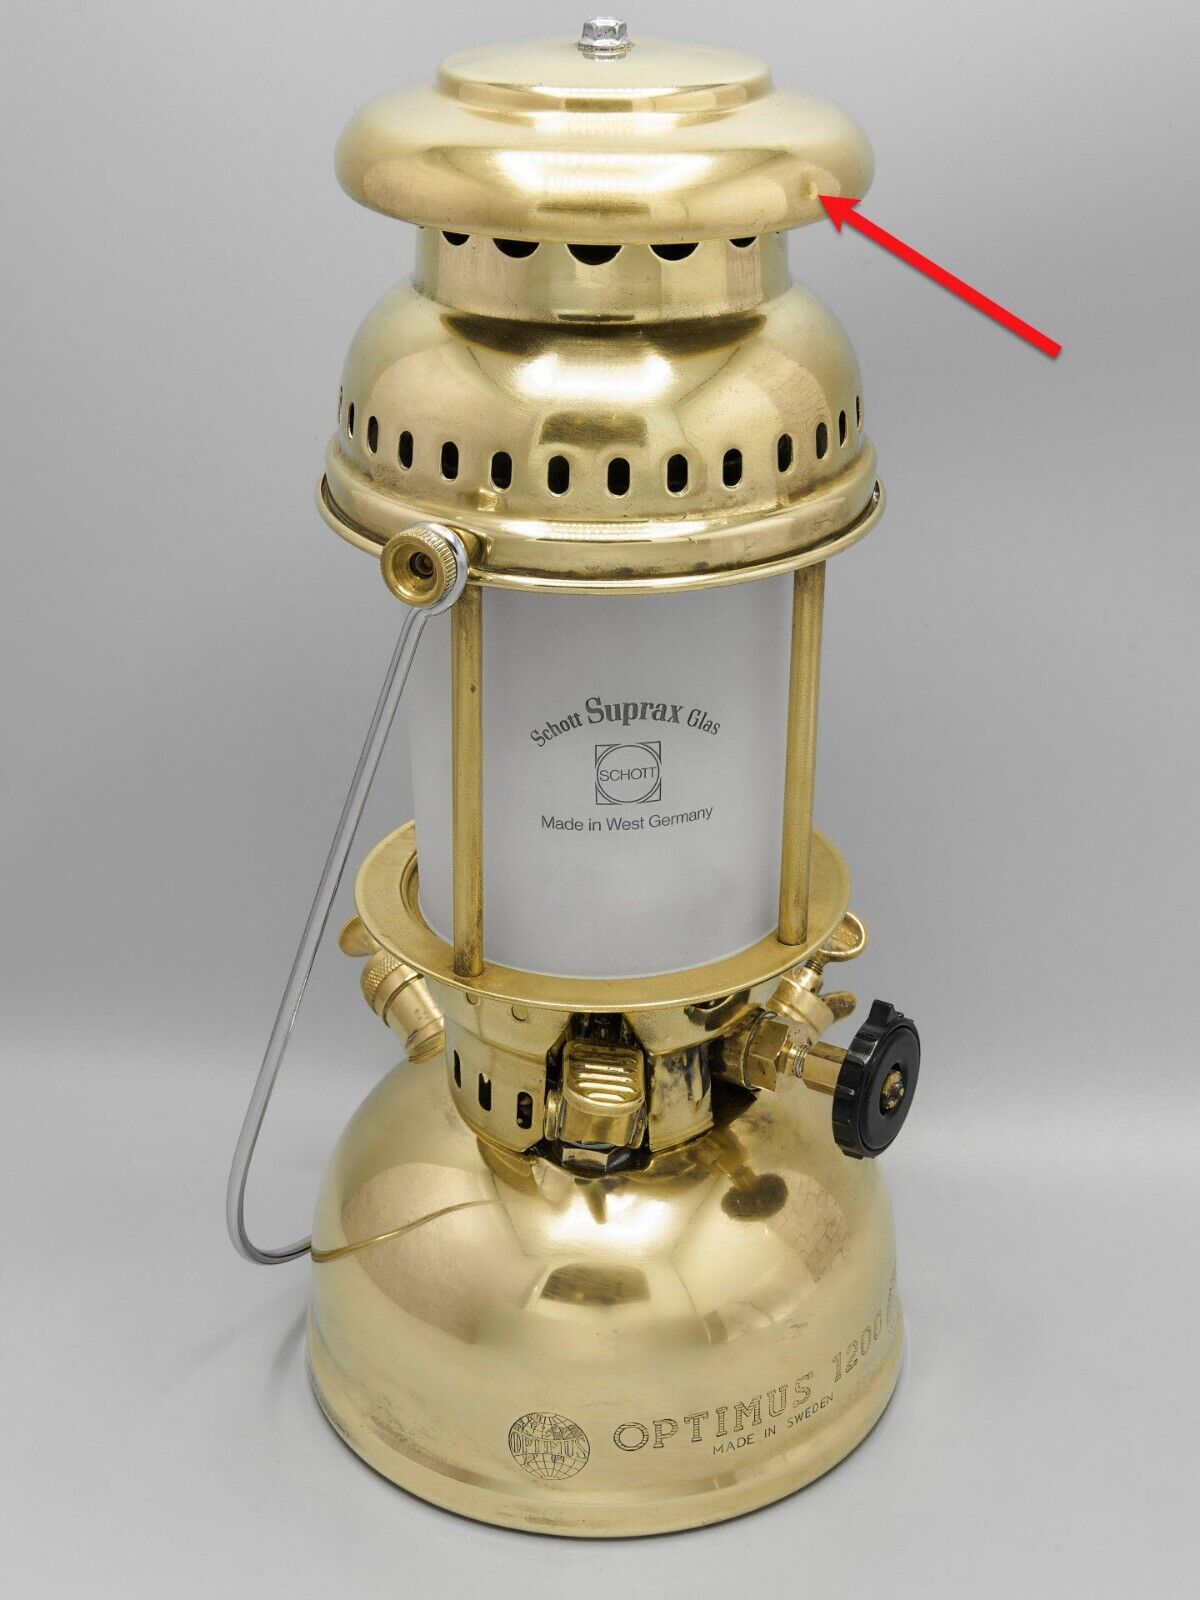 OPTIMUS No1200 Storm Lantern Frosted Glass Antique Kerosene Brass Lamp Sweden